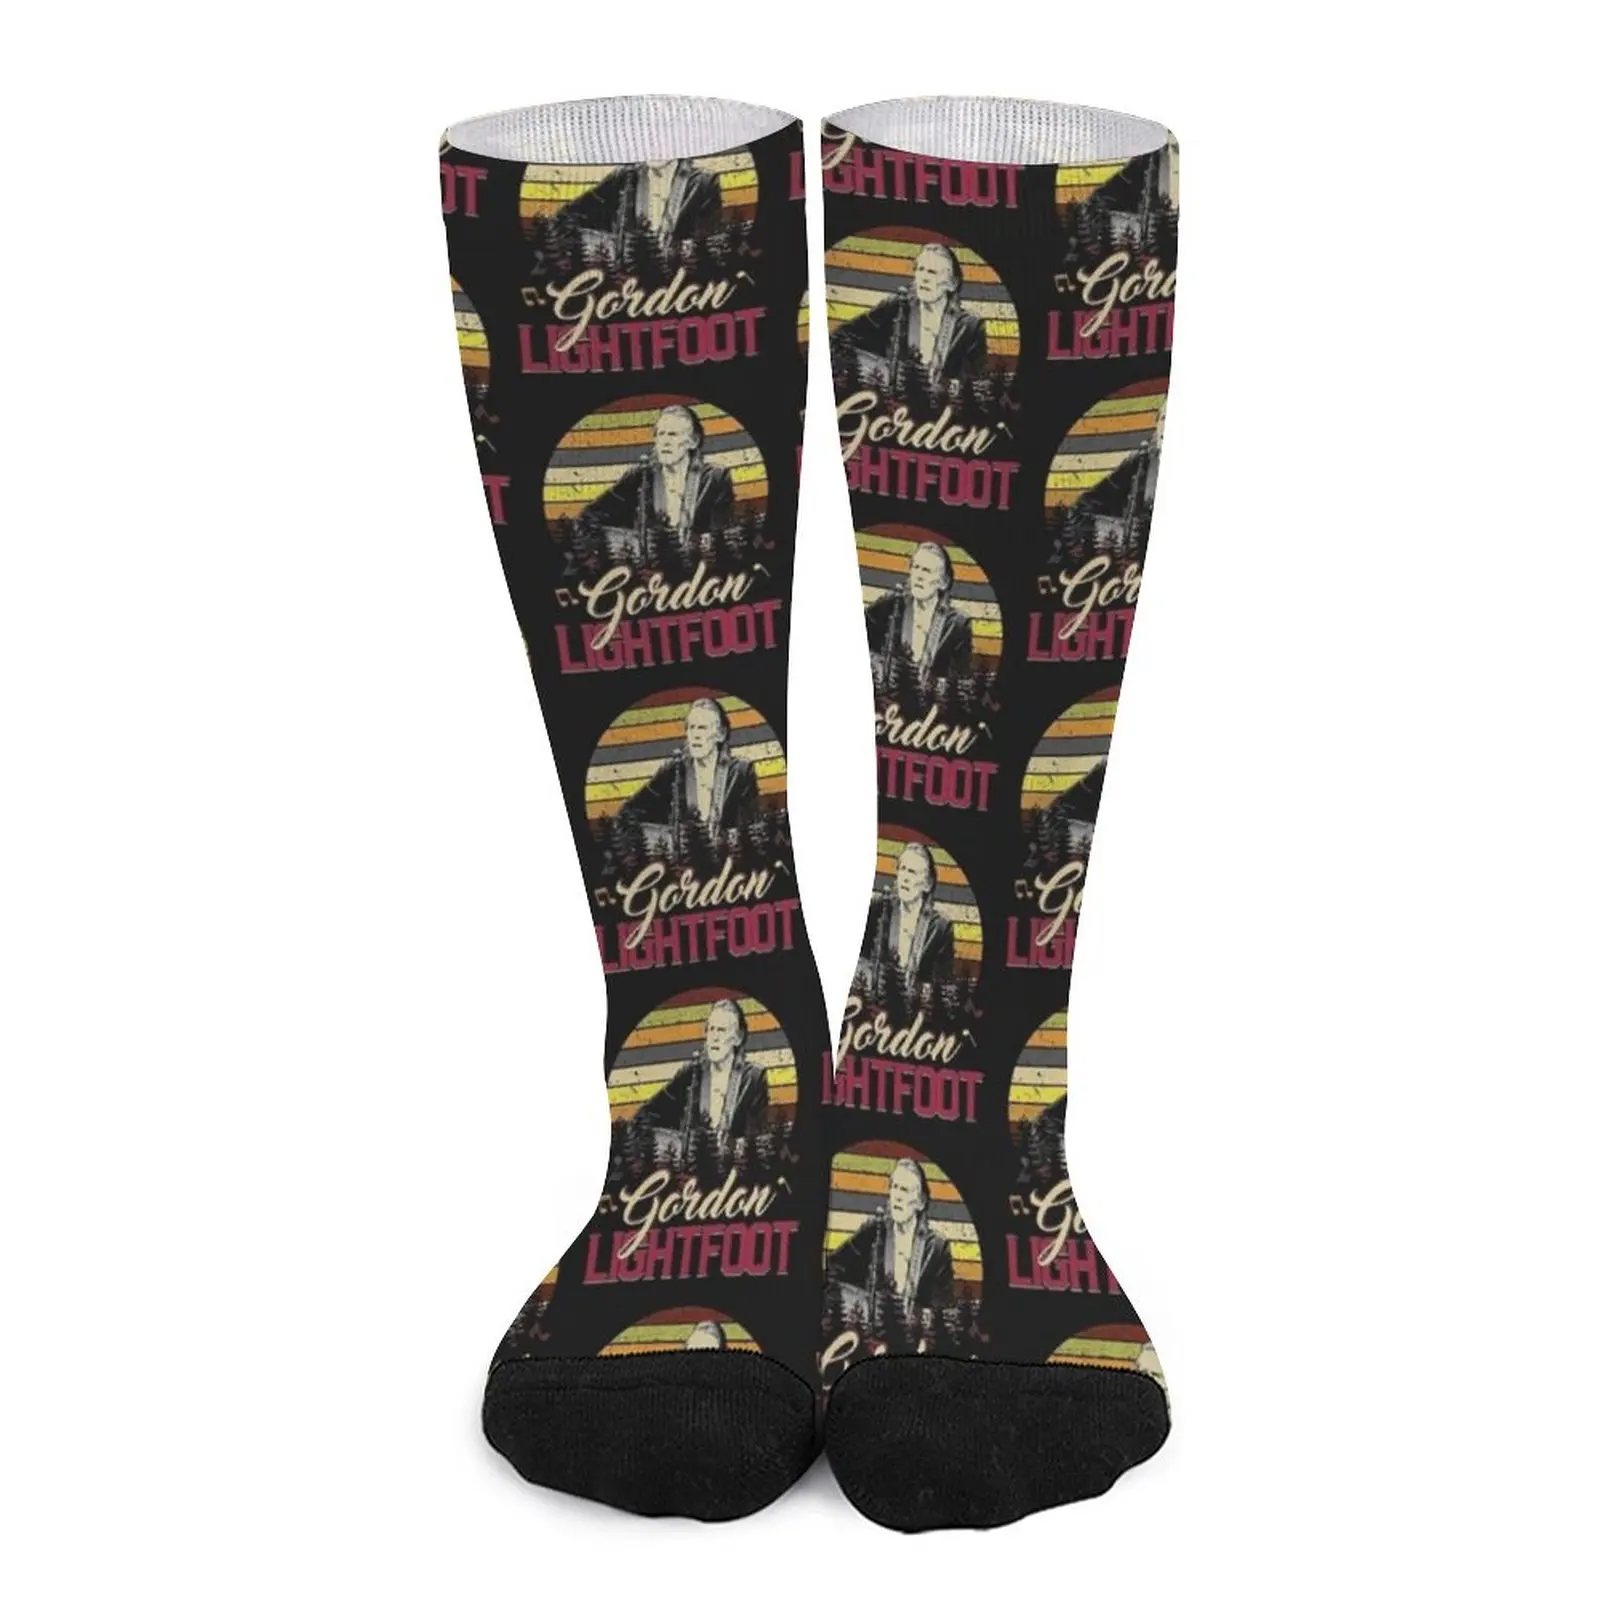 Gordon Lightfoot Fan Socks Women's short socks Fun socks